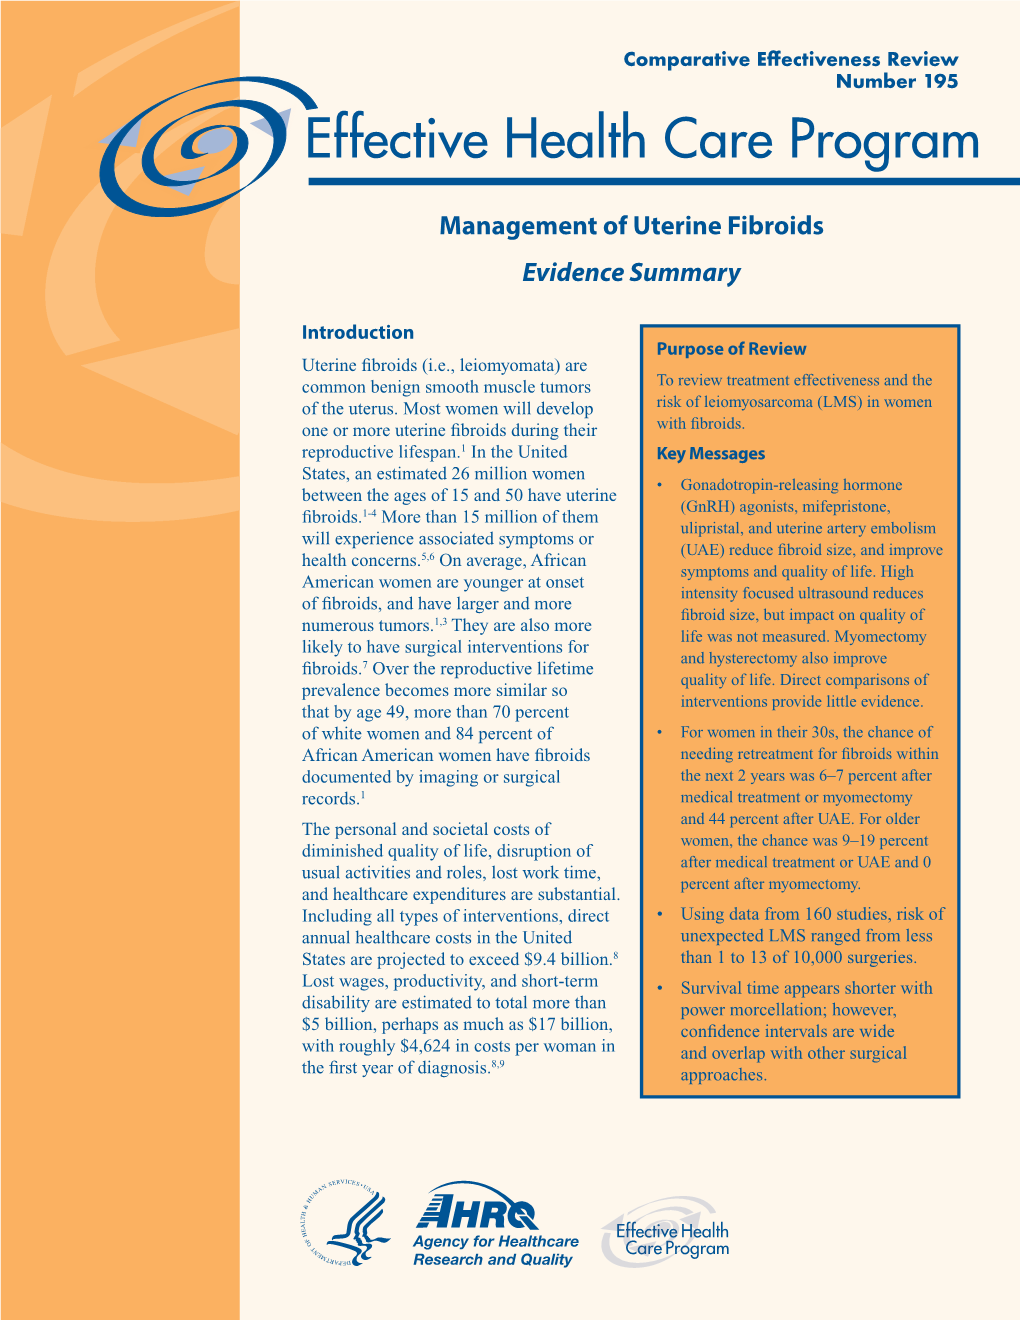 Management of Uterine Fibroids Evidence Summary